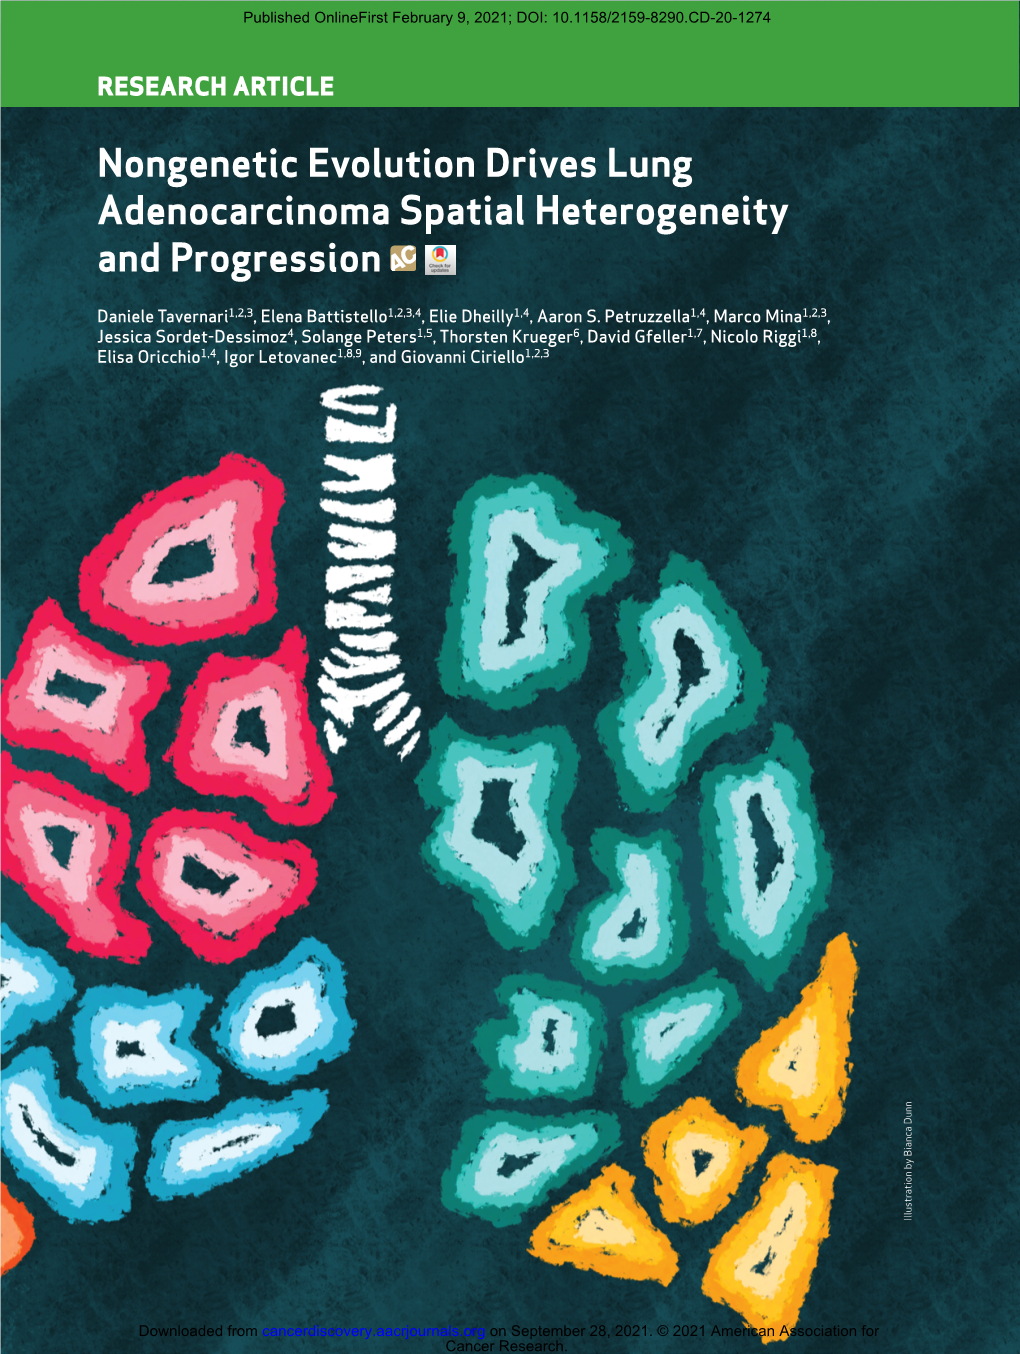 Nongenetic Evolution Drives Lung Adenocarcinoma Spatial Heterogeneity and Progression